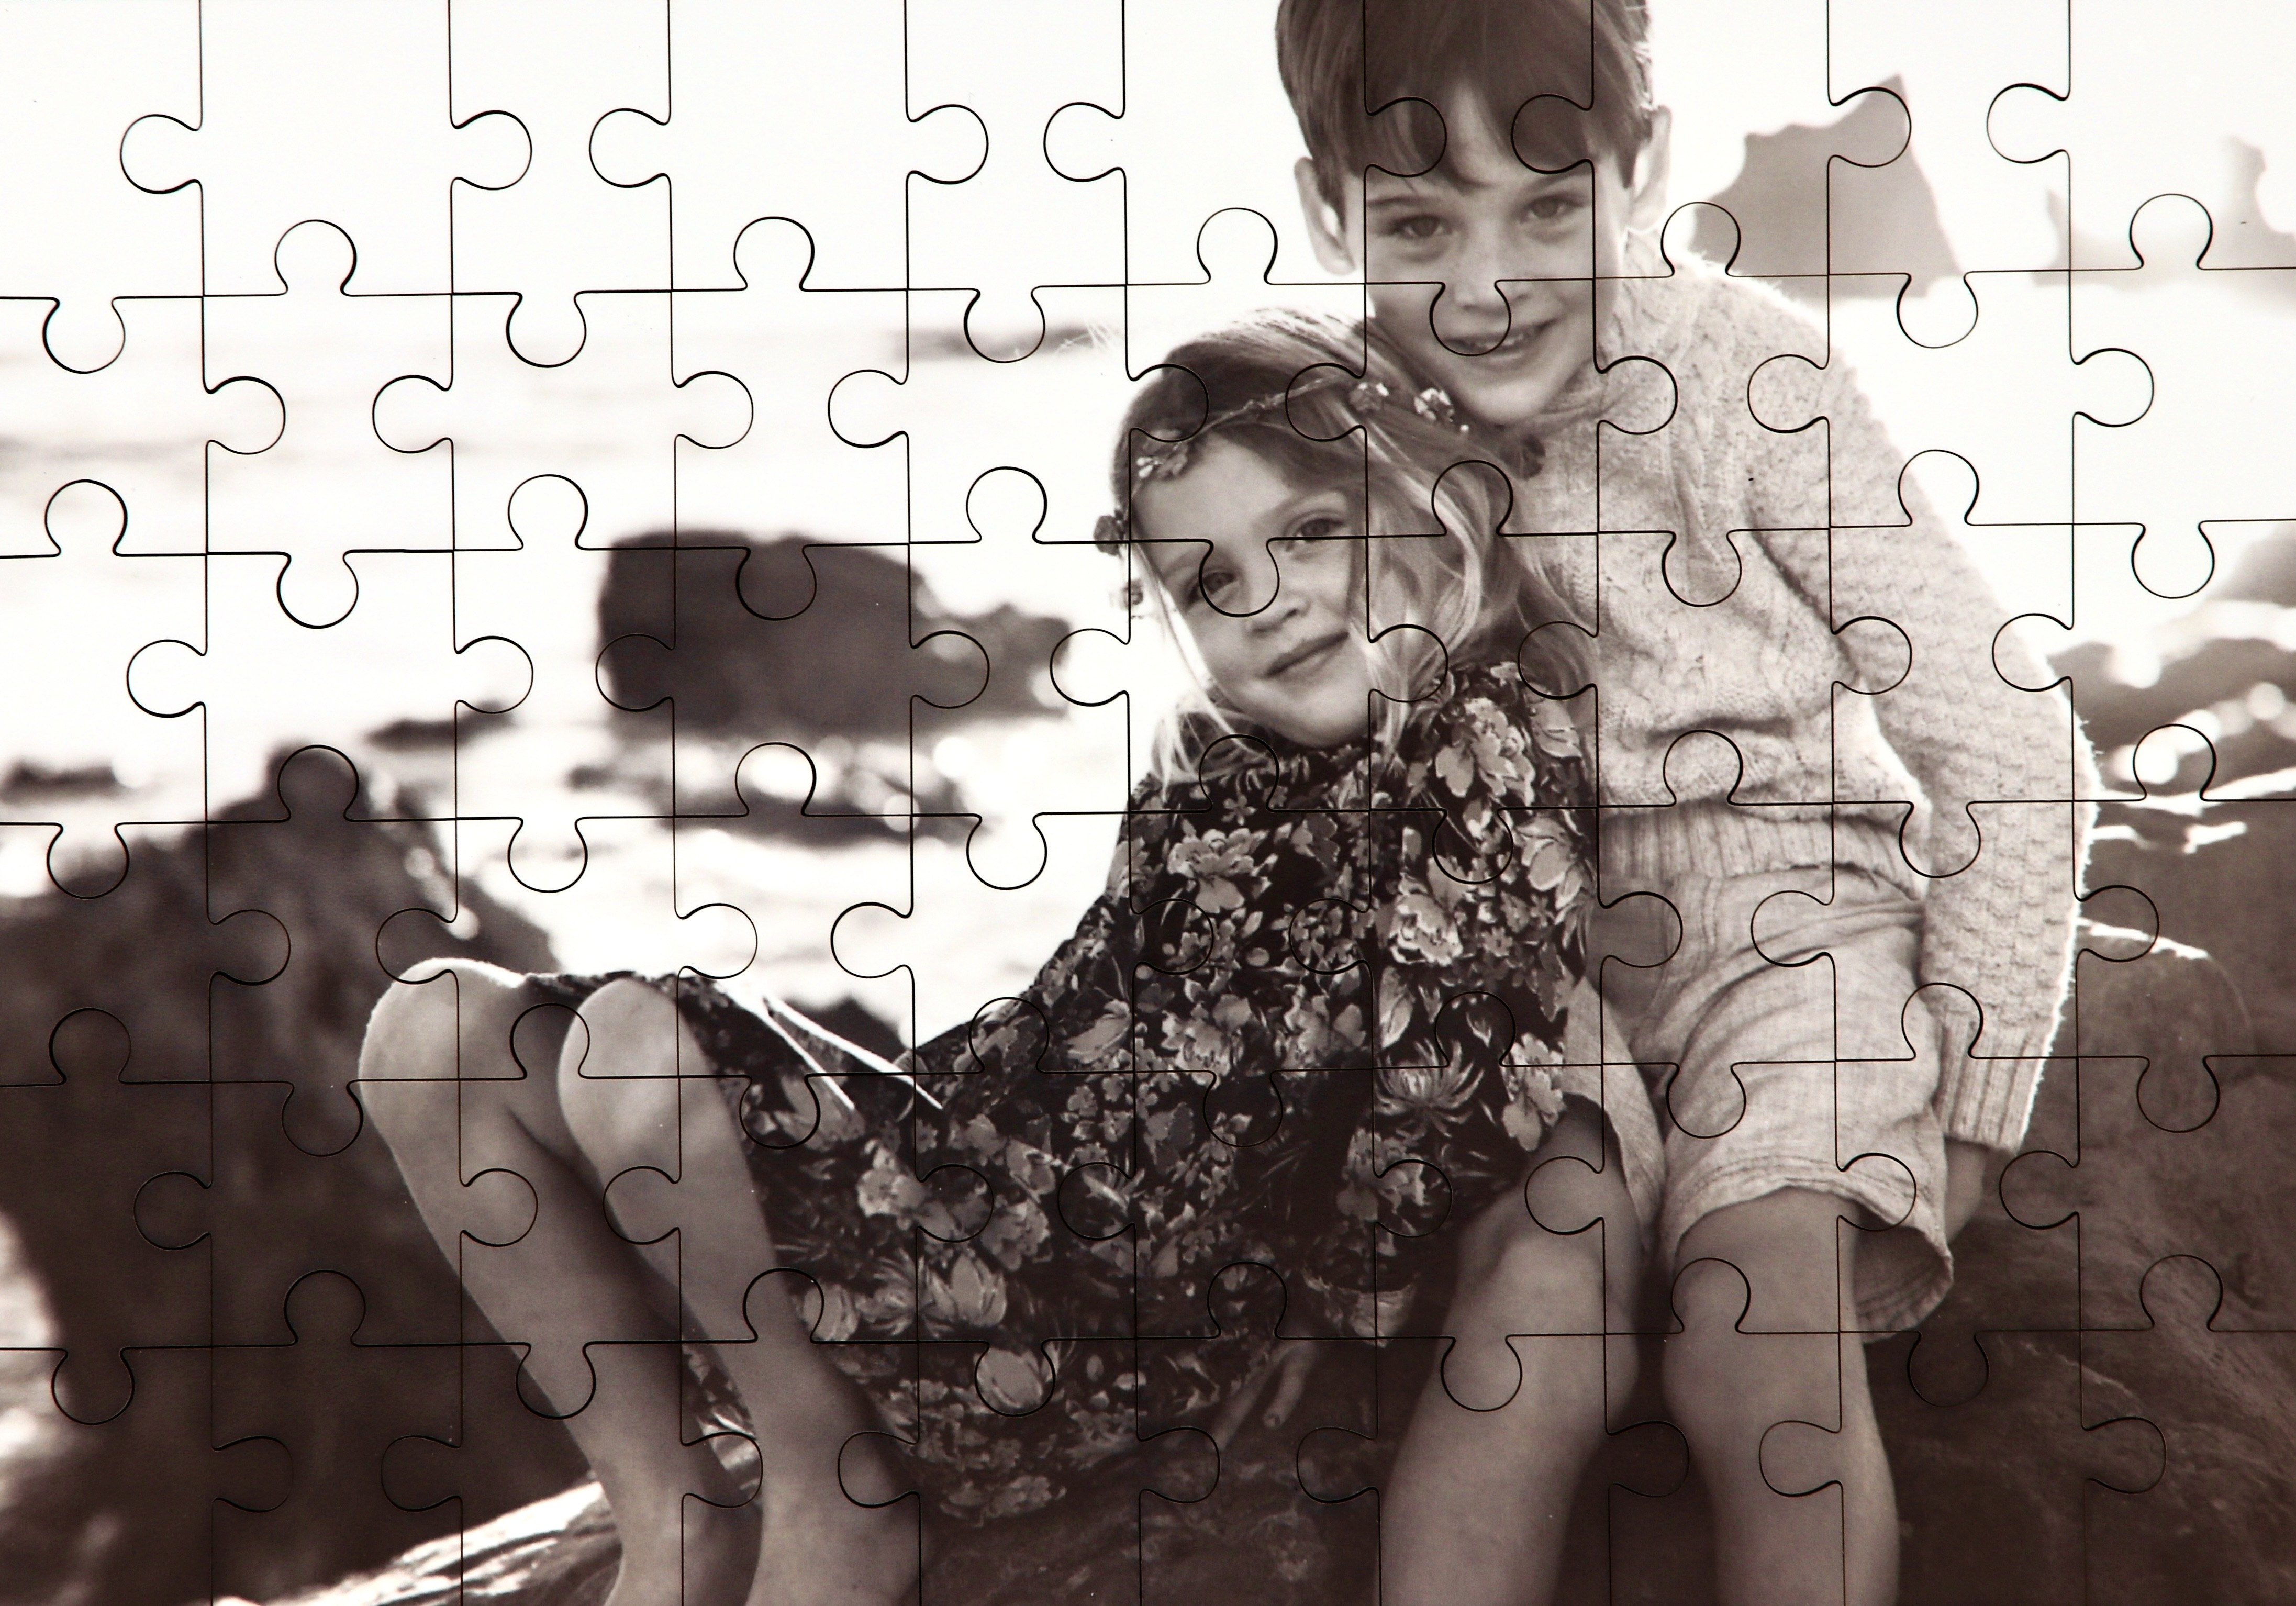 30 Piece Puzzle 7"x10"